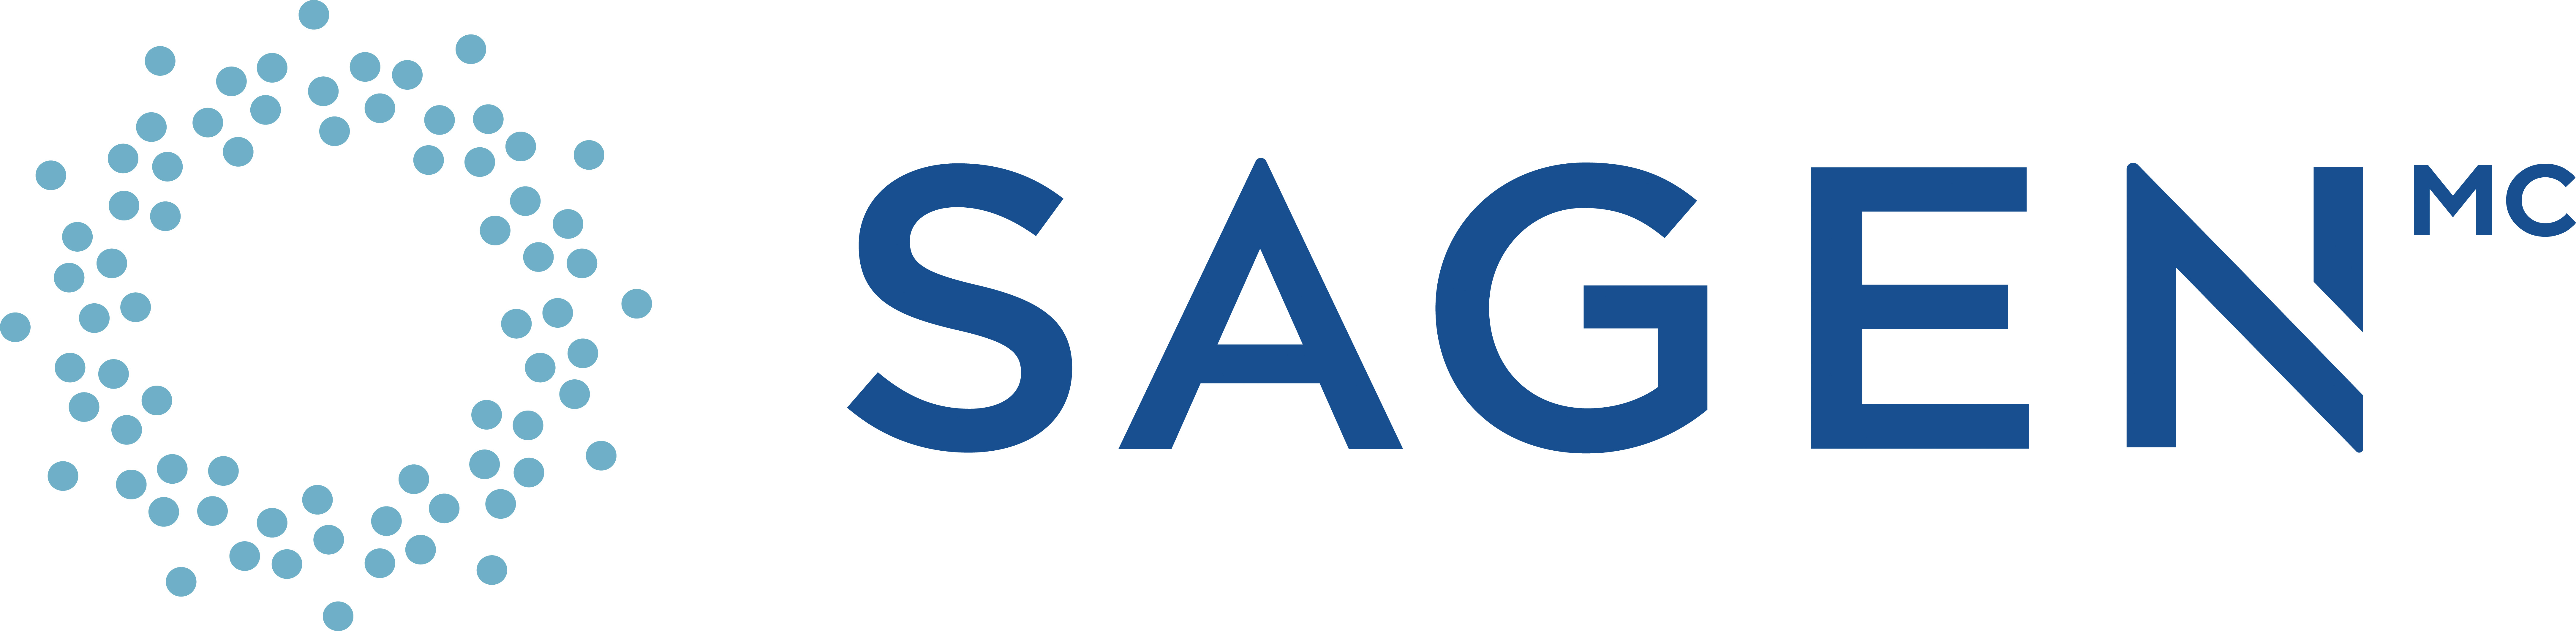 sagen-logo-MC_light-bg.jpg (1)